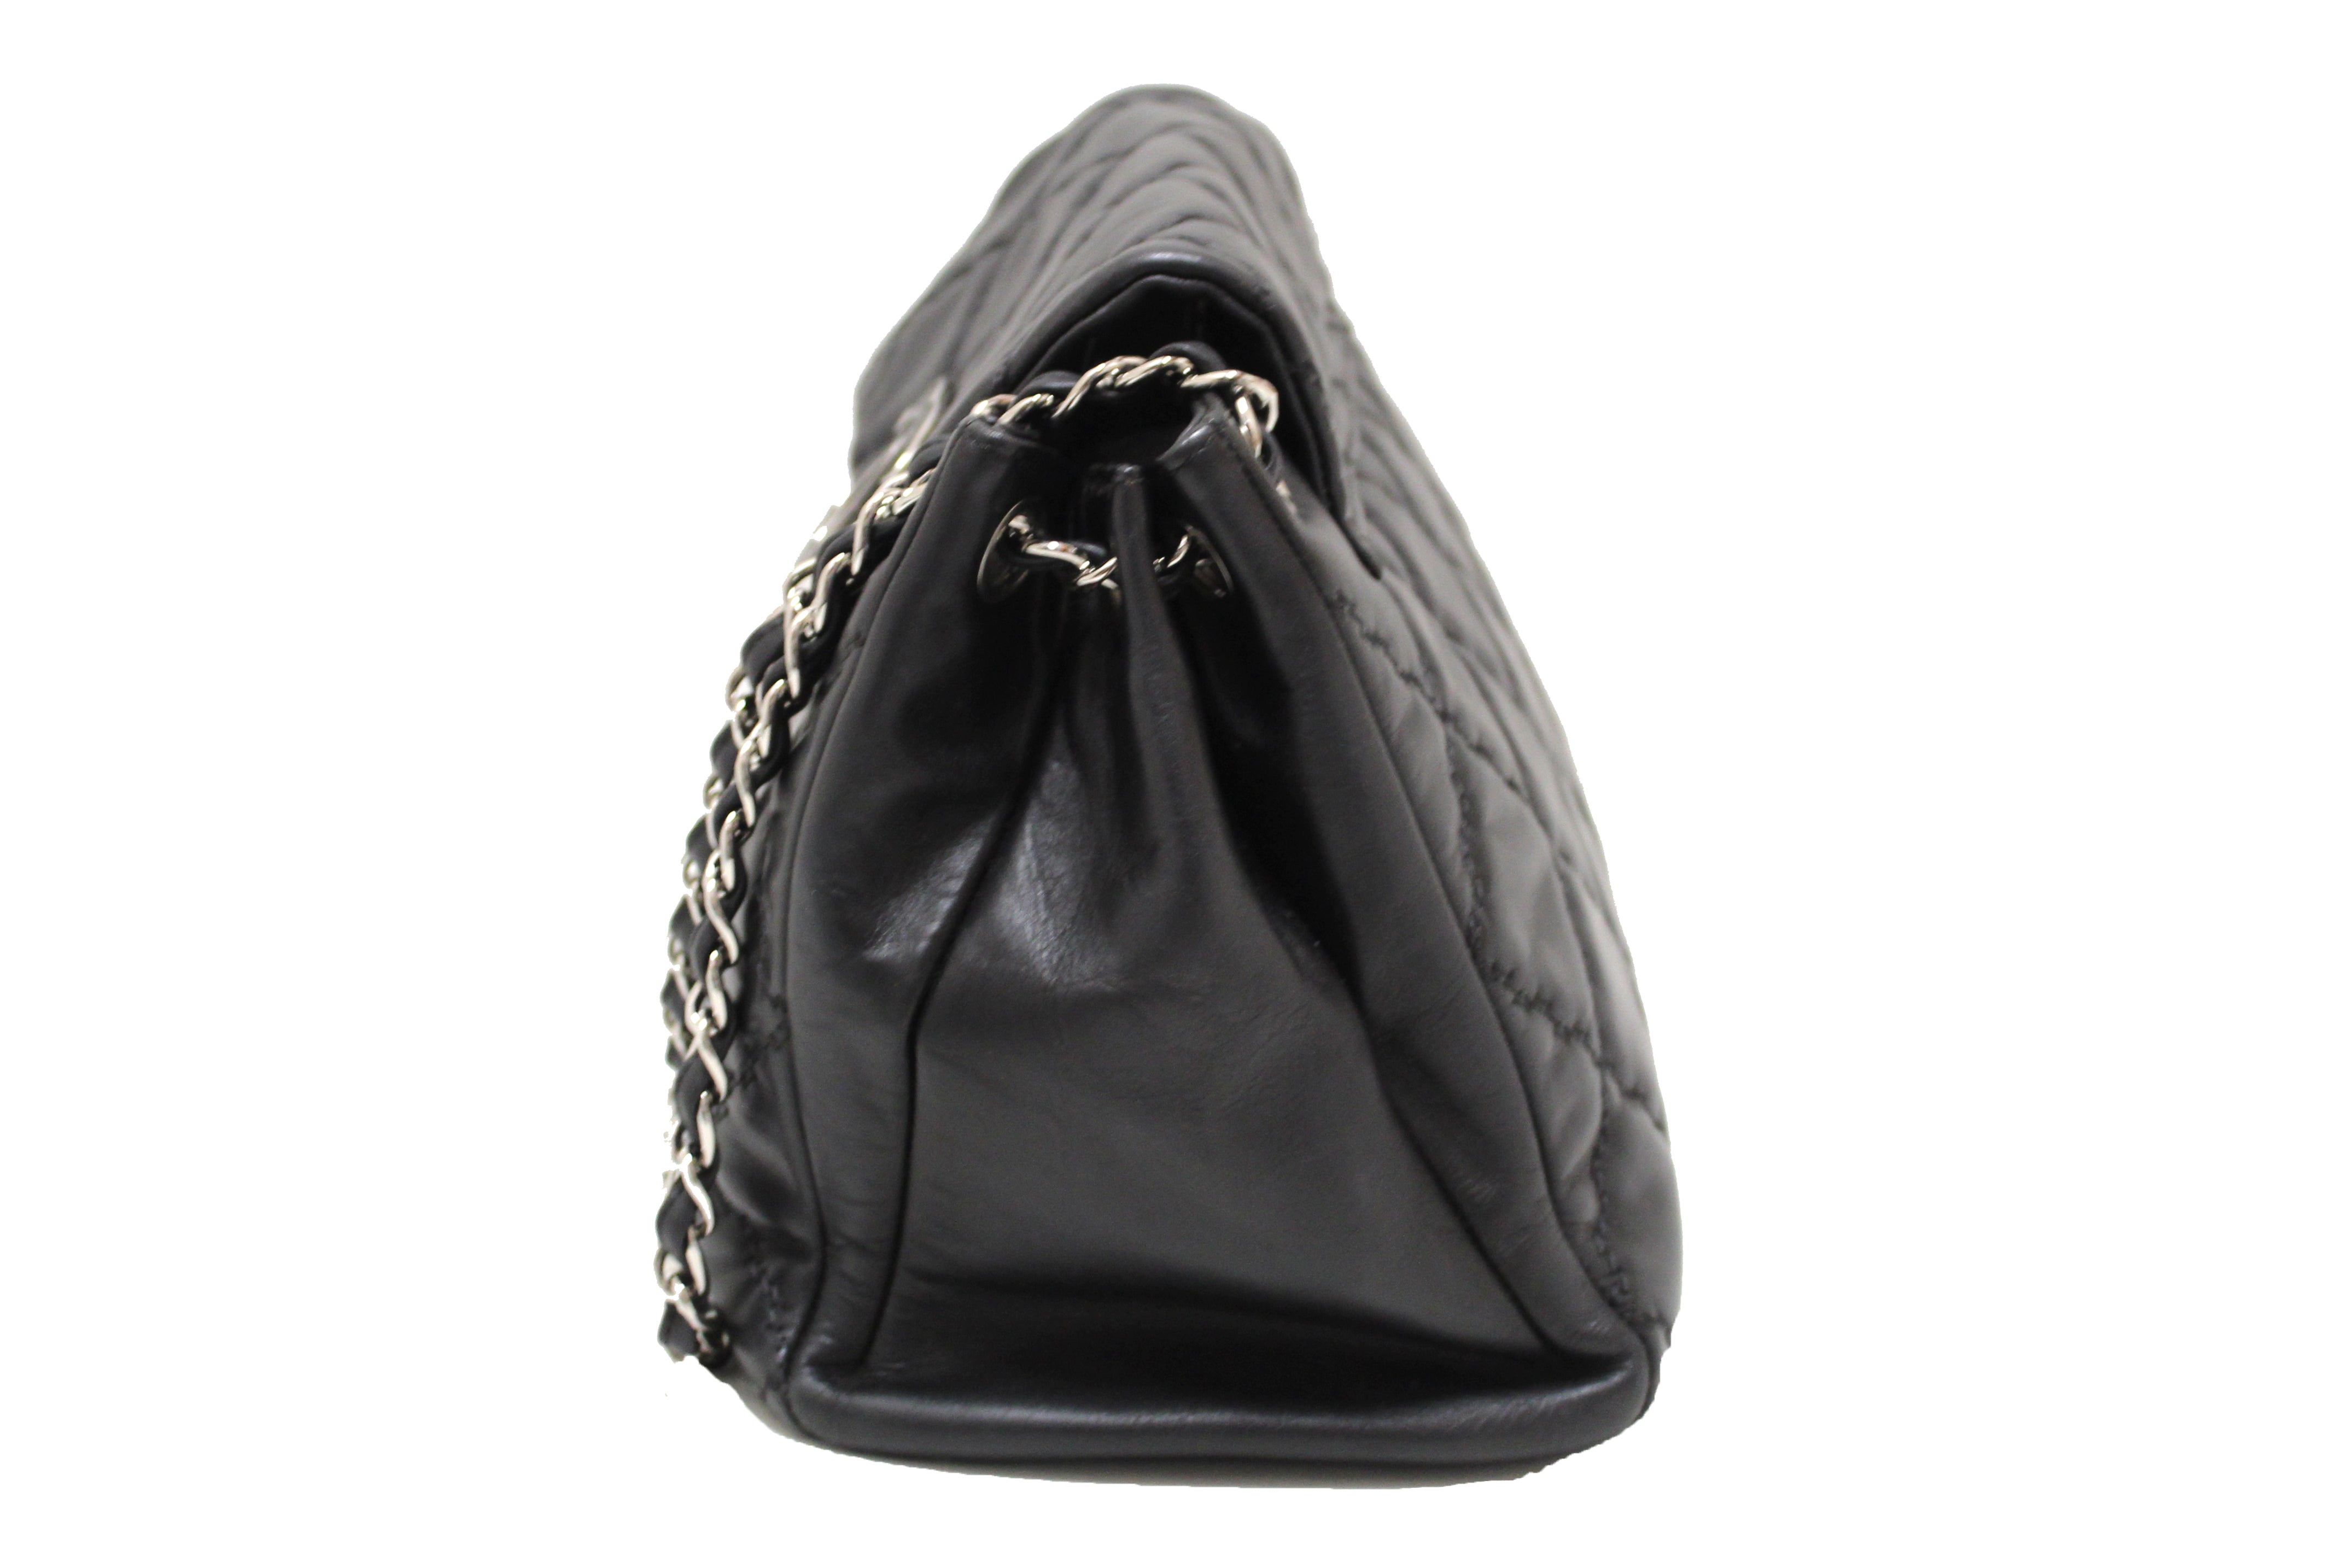 Chanel Accordion Flap Bag